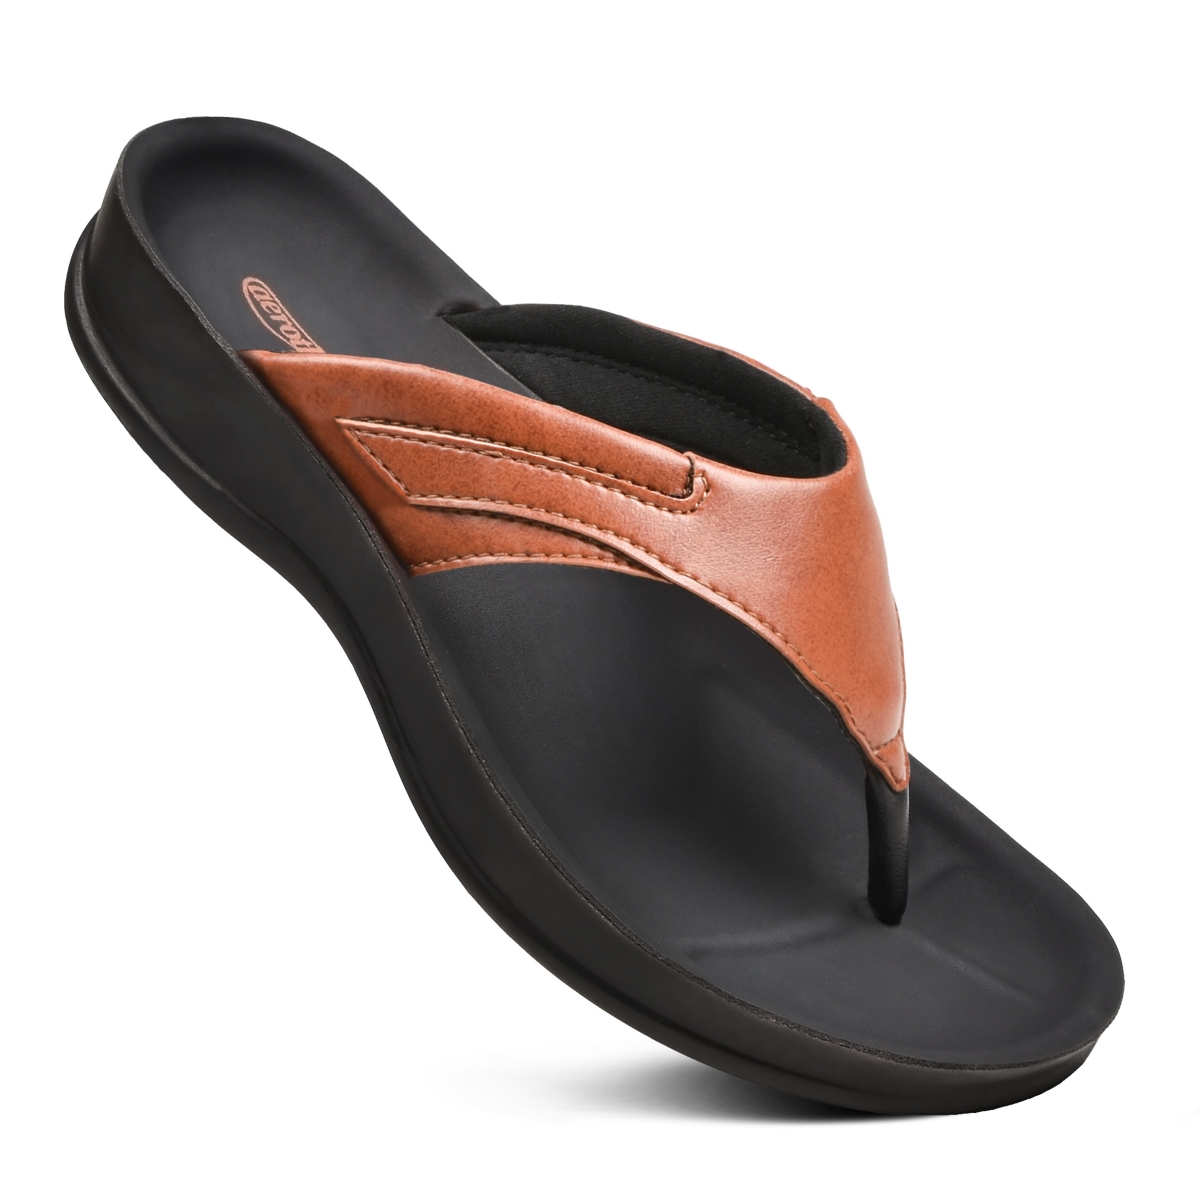 Algiz Comfortable Womens Sandal - Black